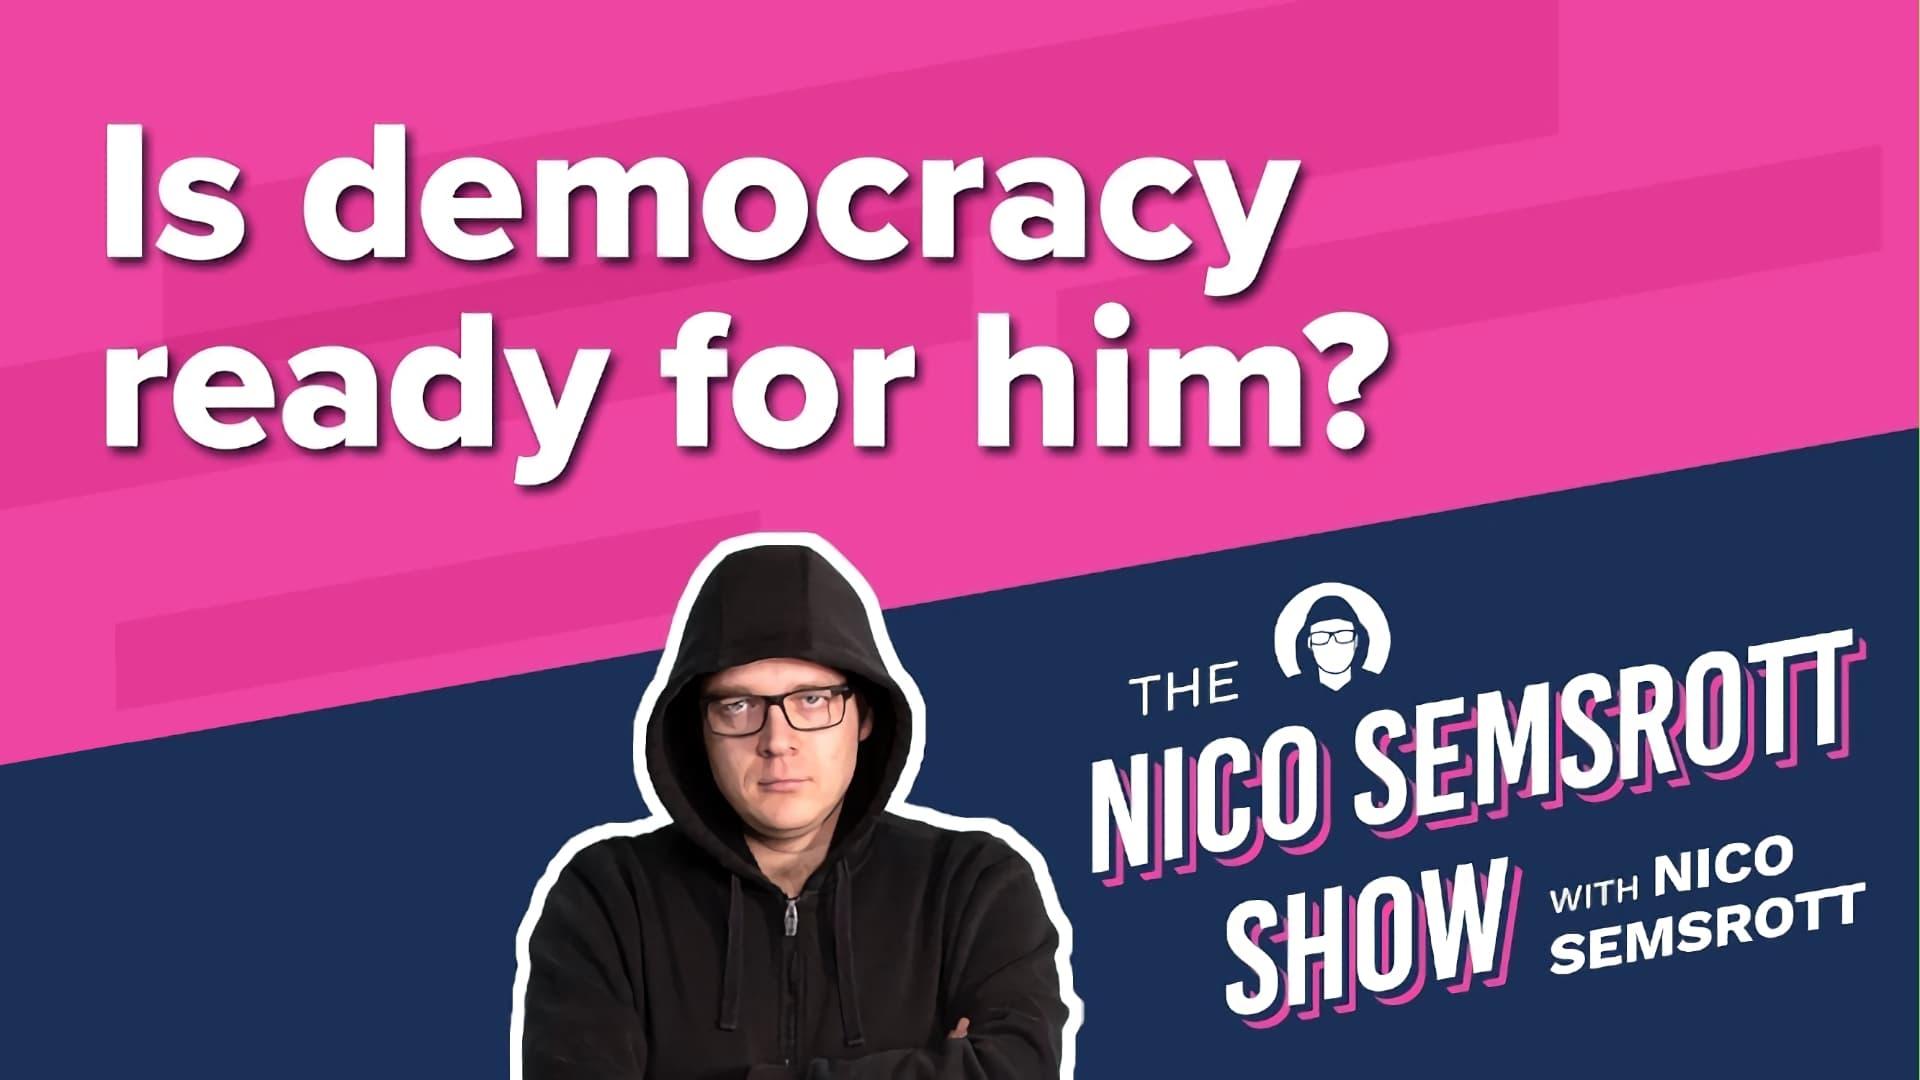 The Nico Semsrott Show backdrop